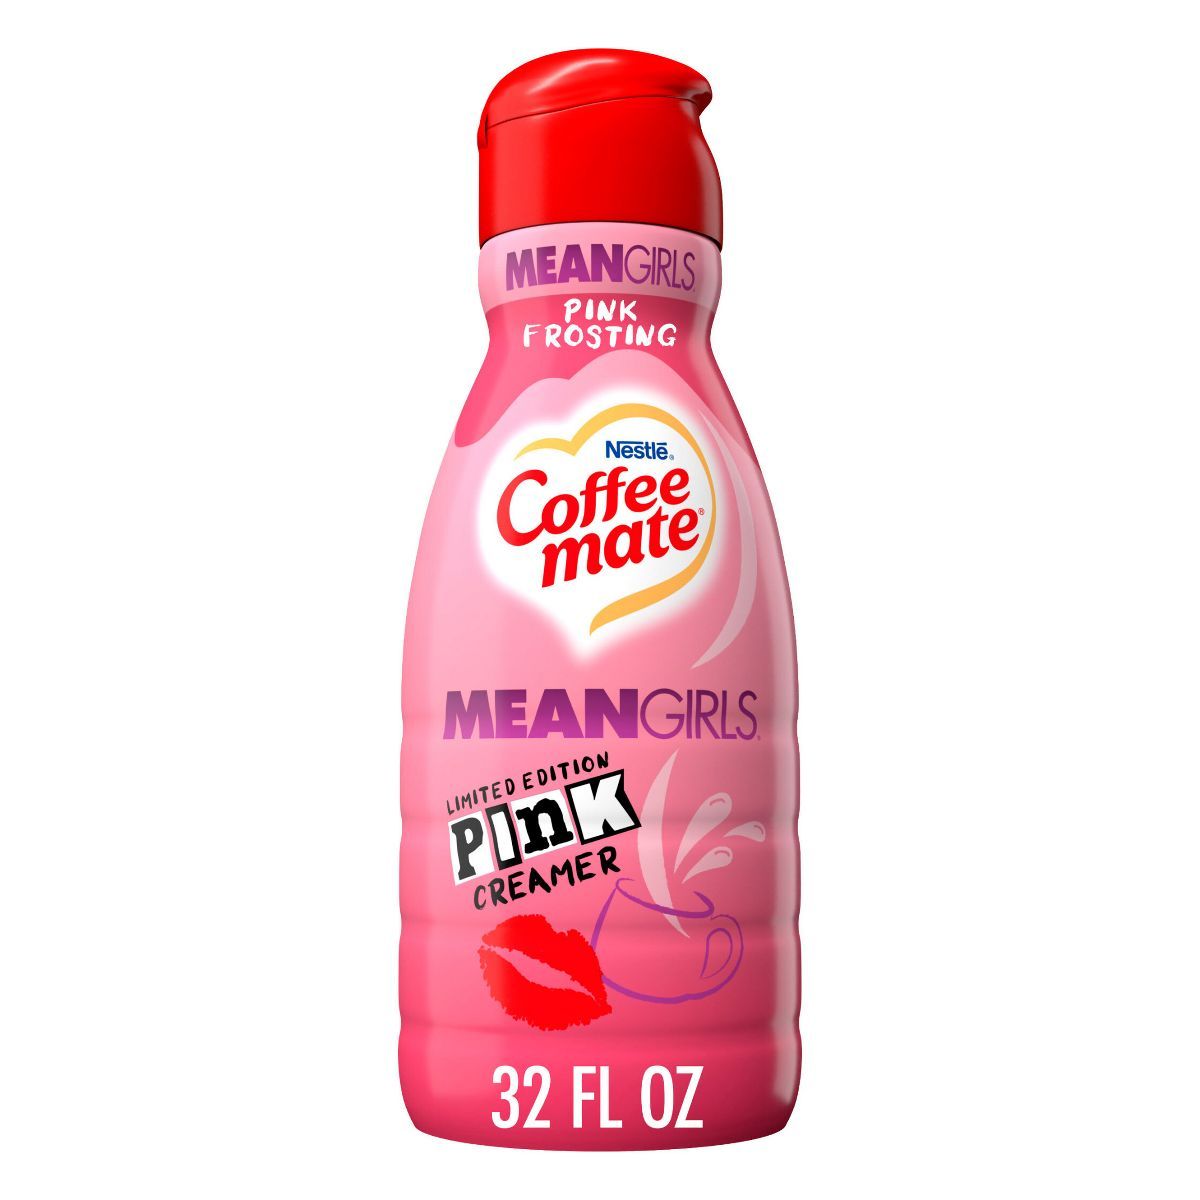 Coffee mate Mean Girls Pink Frosting Coffee Creamer - 32oz | Target